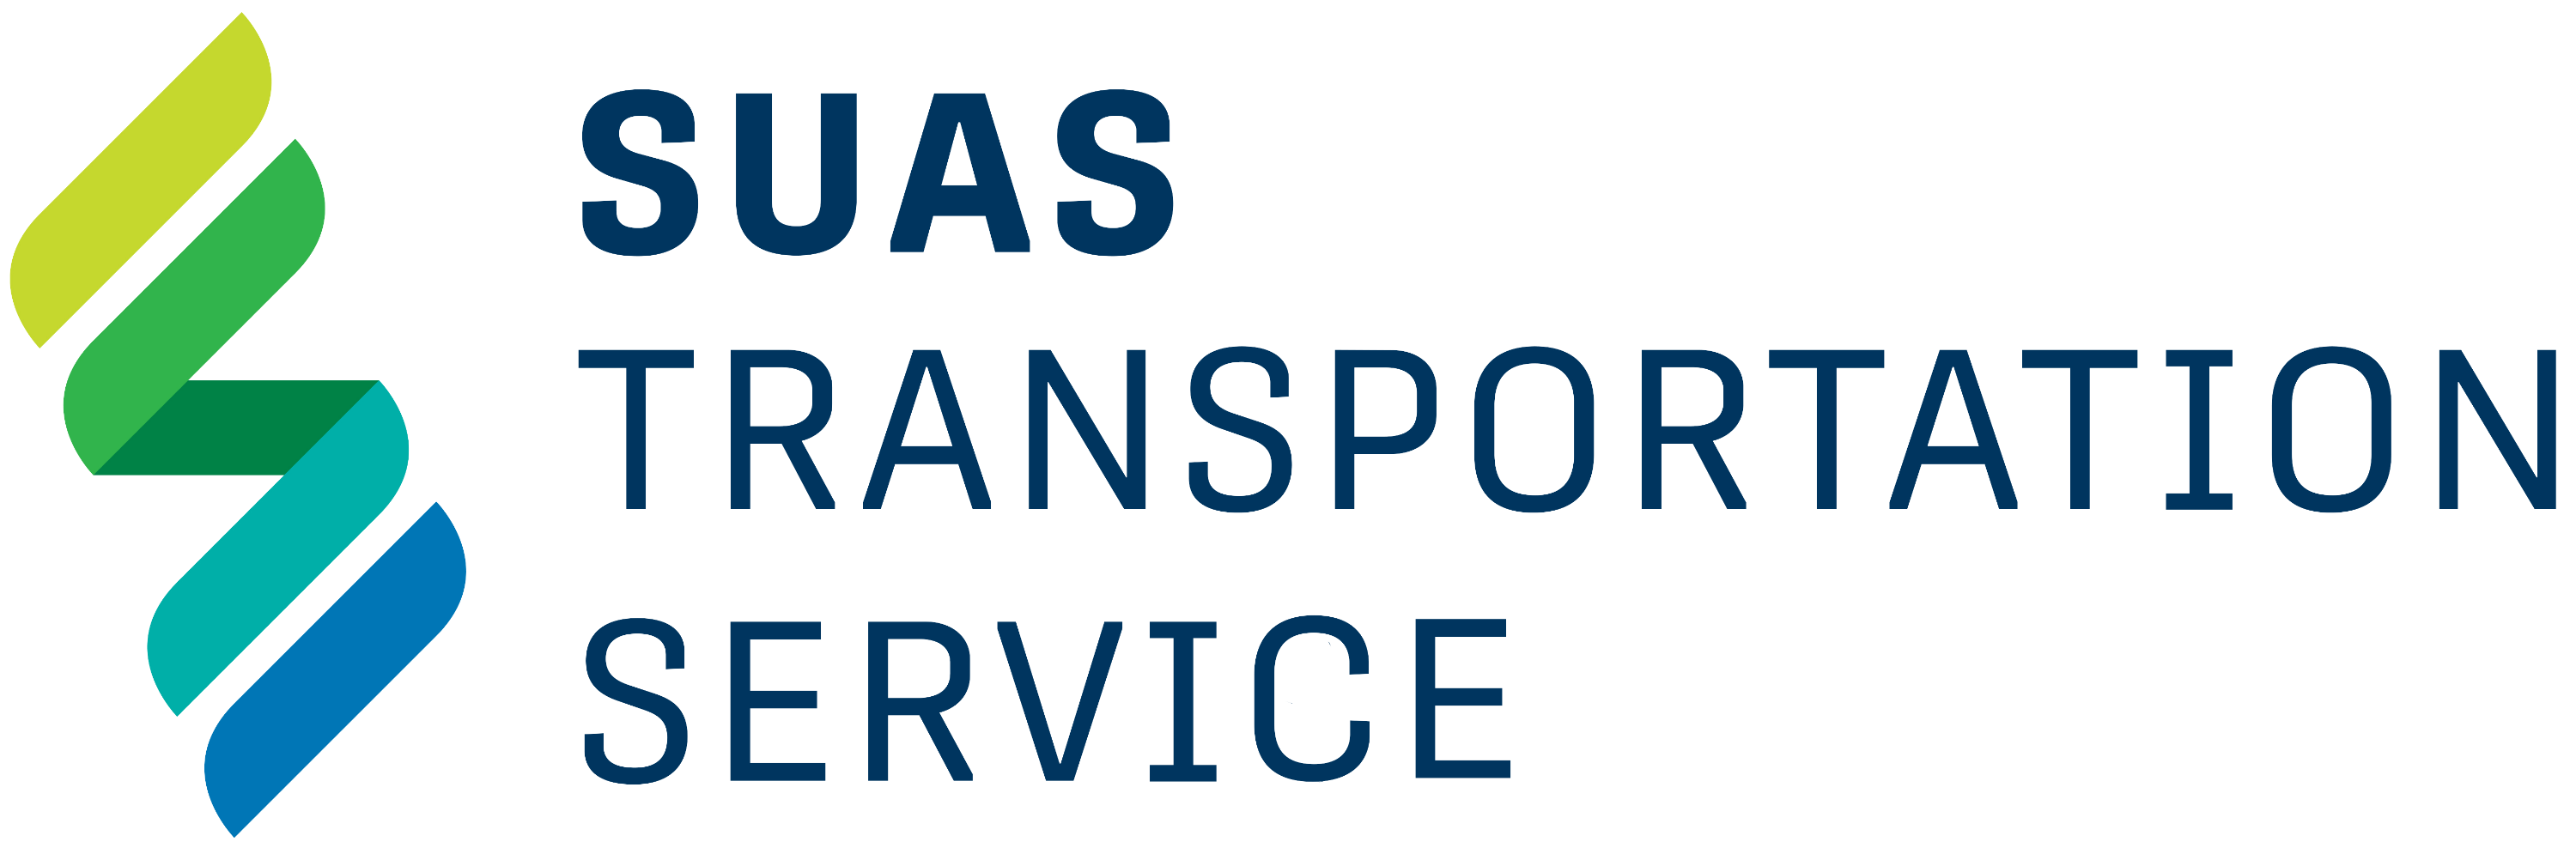 SUAS Transportation Service